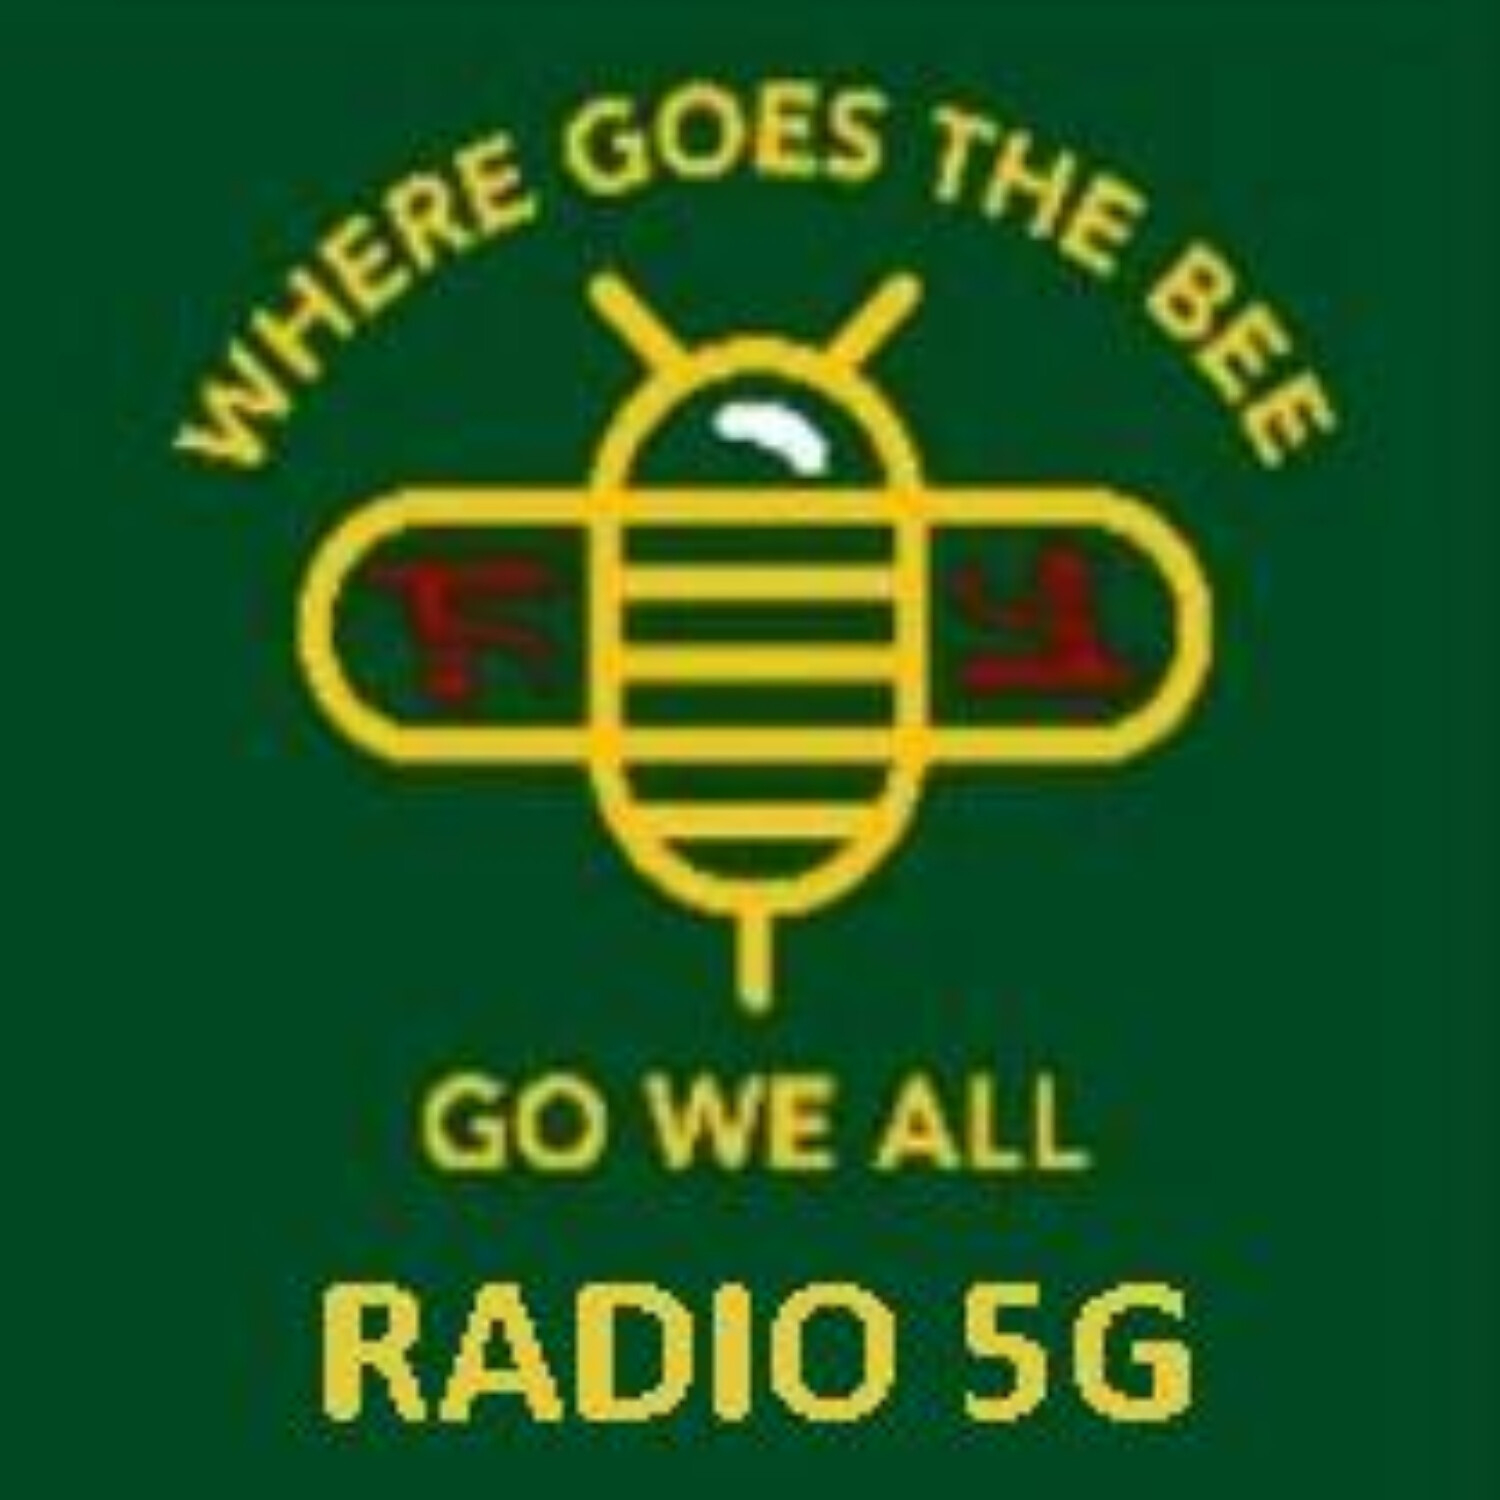 “RADIO 5G” 9/4/2019 - Dr Martin Pall on 5G Dangers